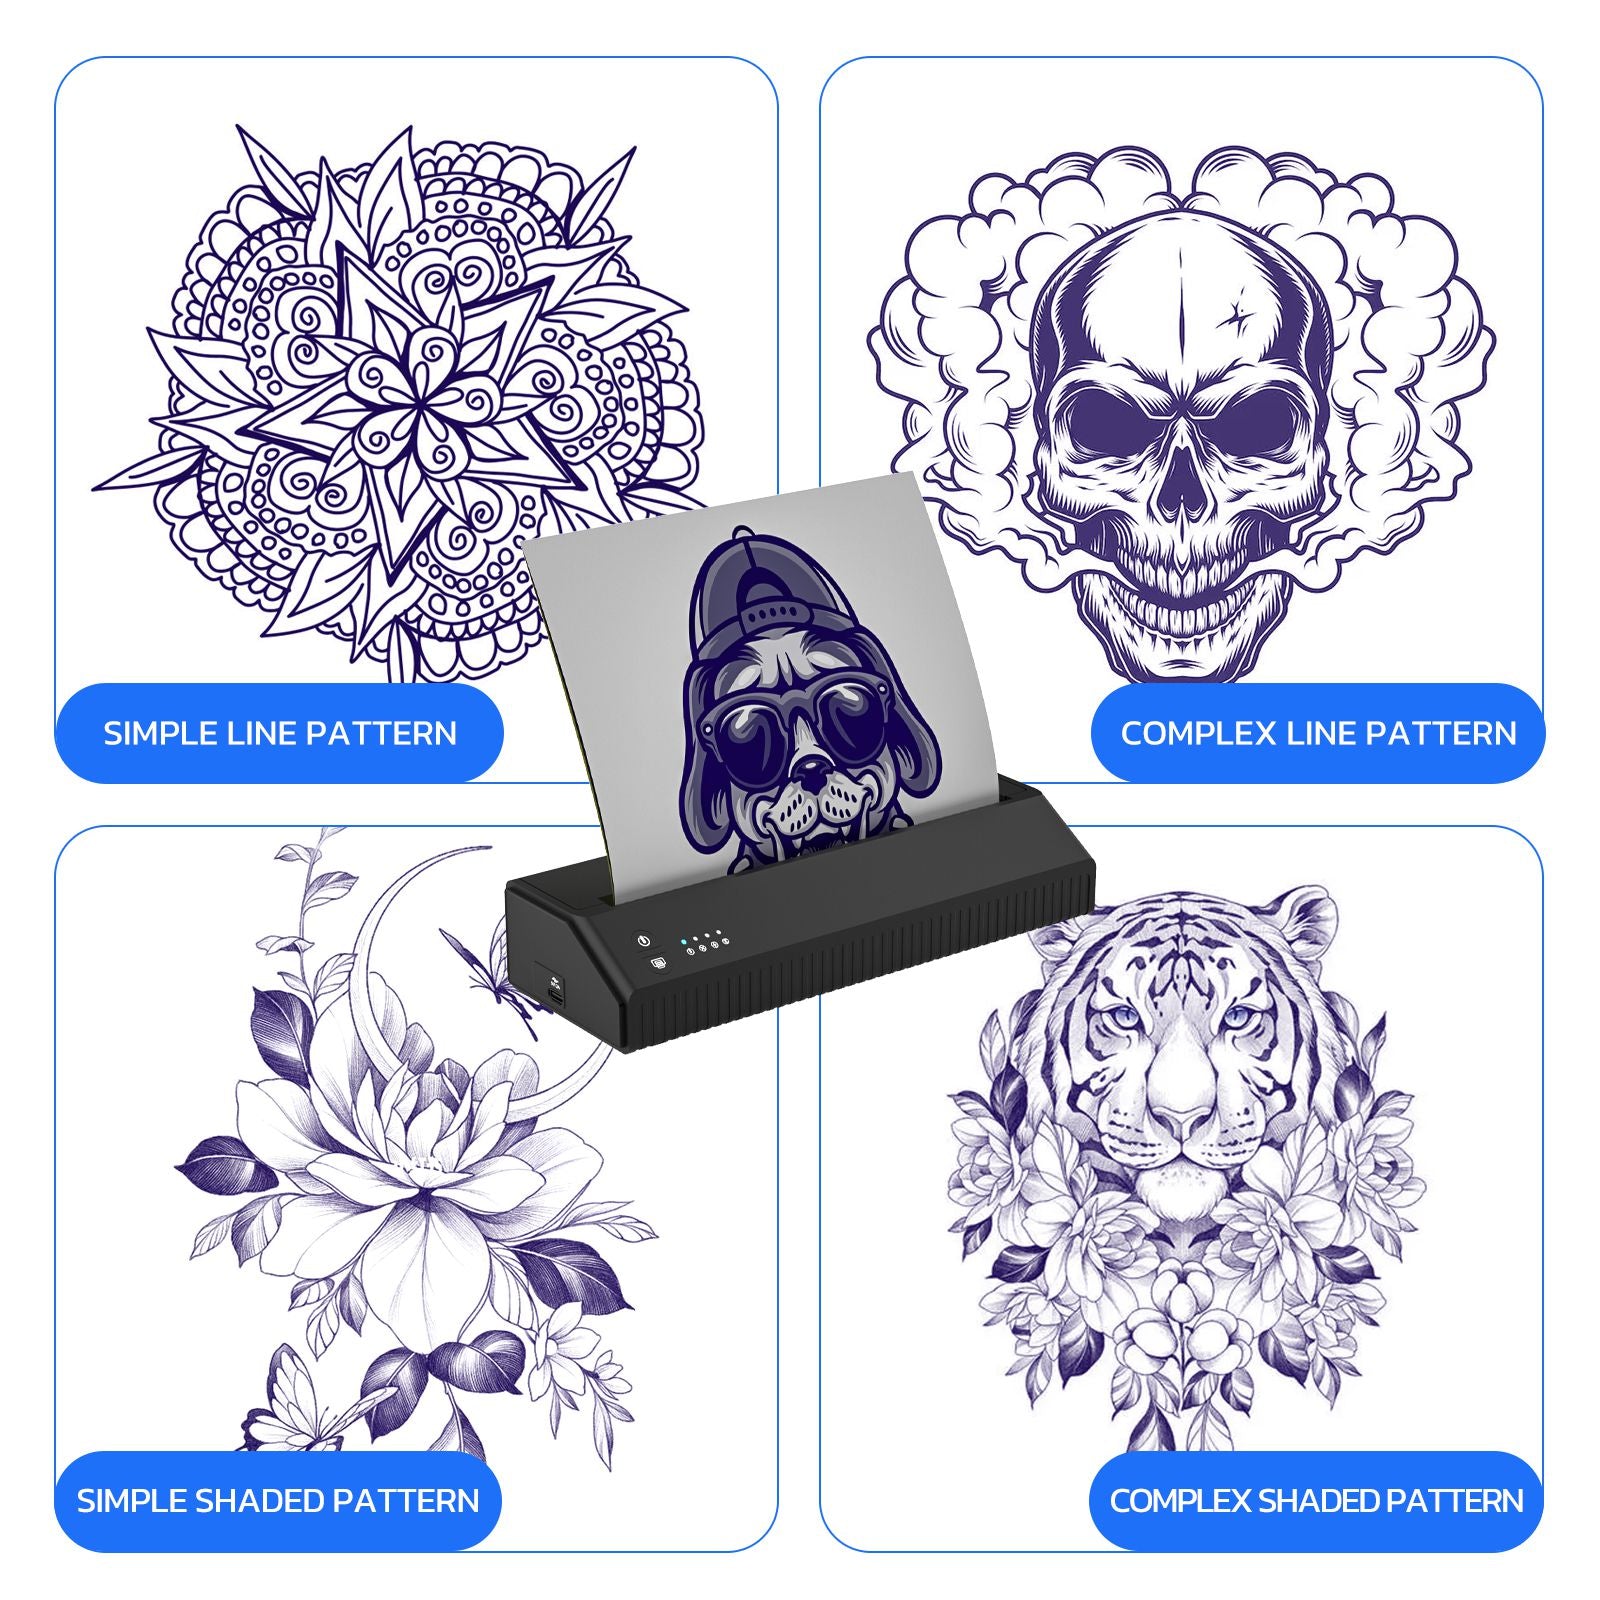 Wireless Bluetooth Tattoo Transfer Stencil Machine Tattoo Copier Printer